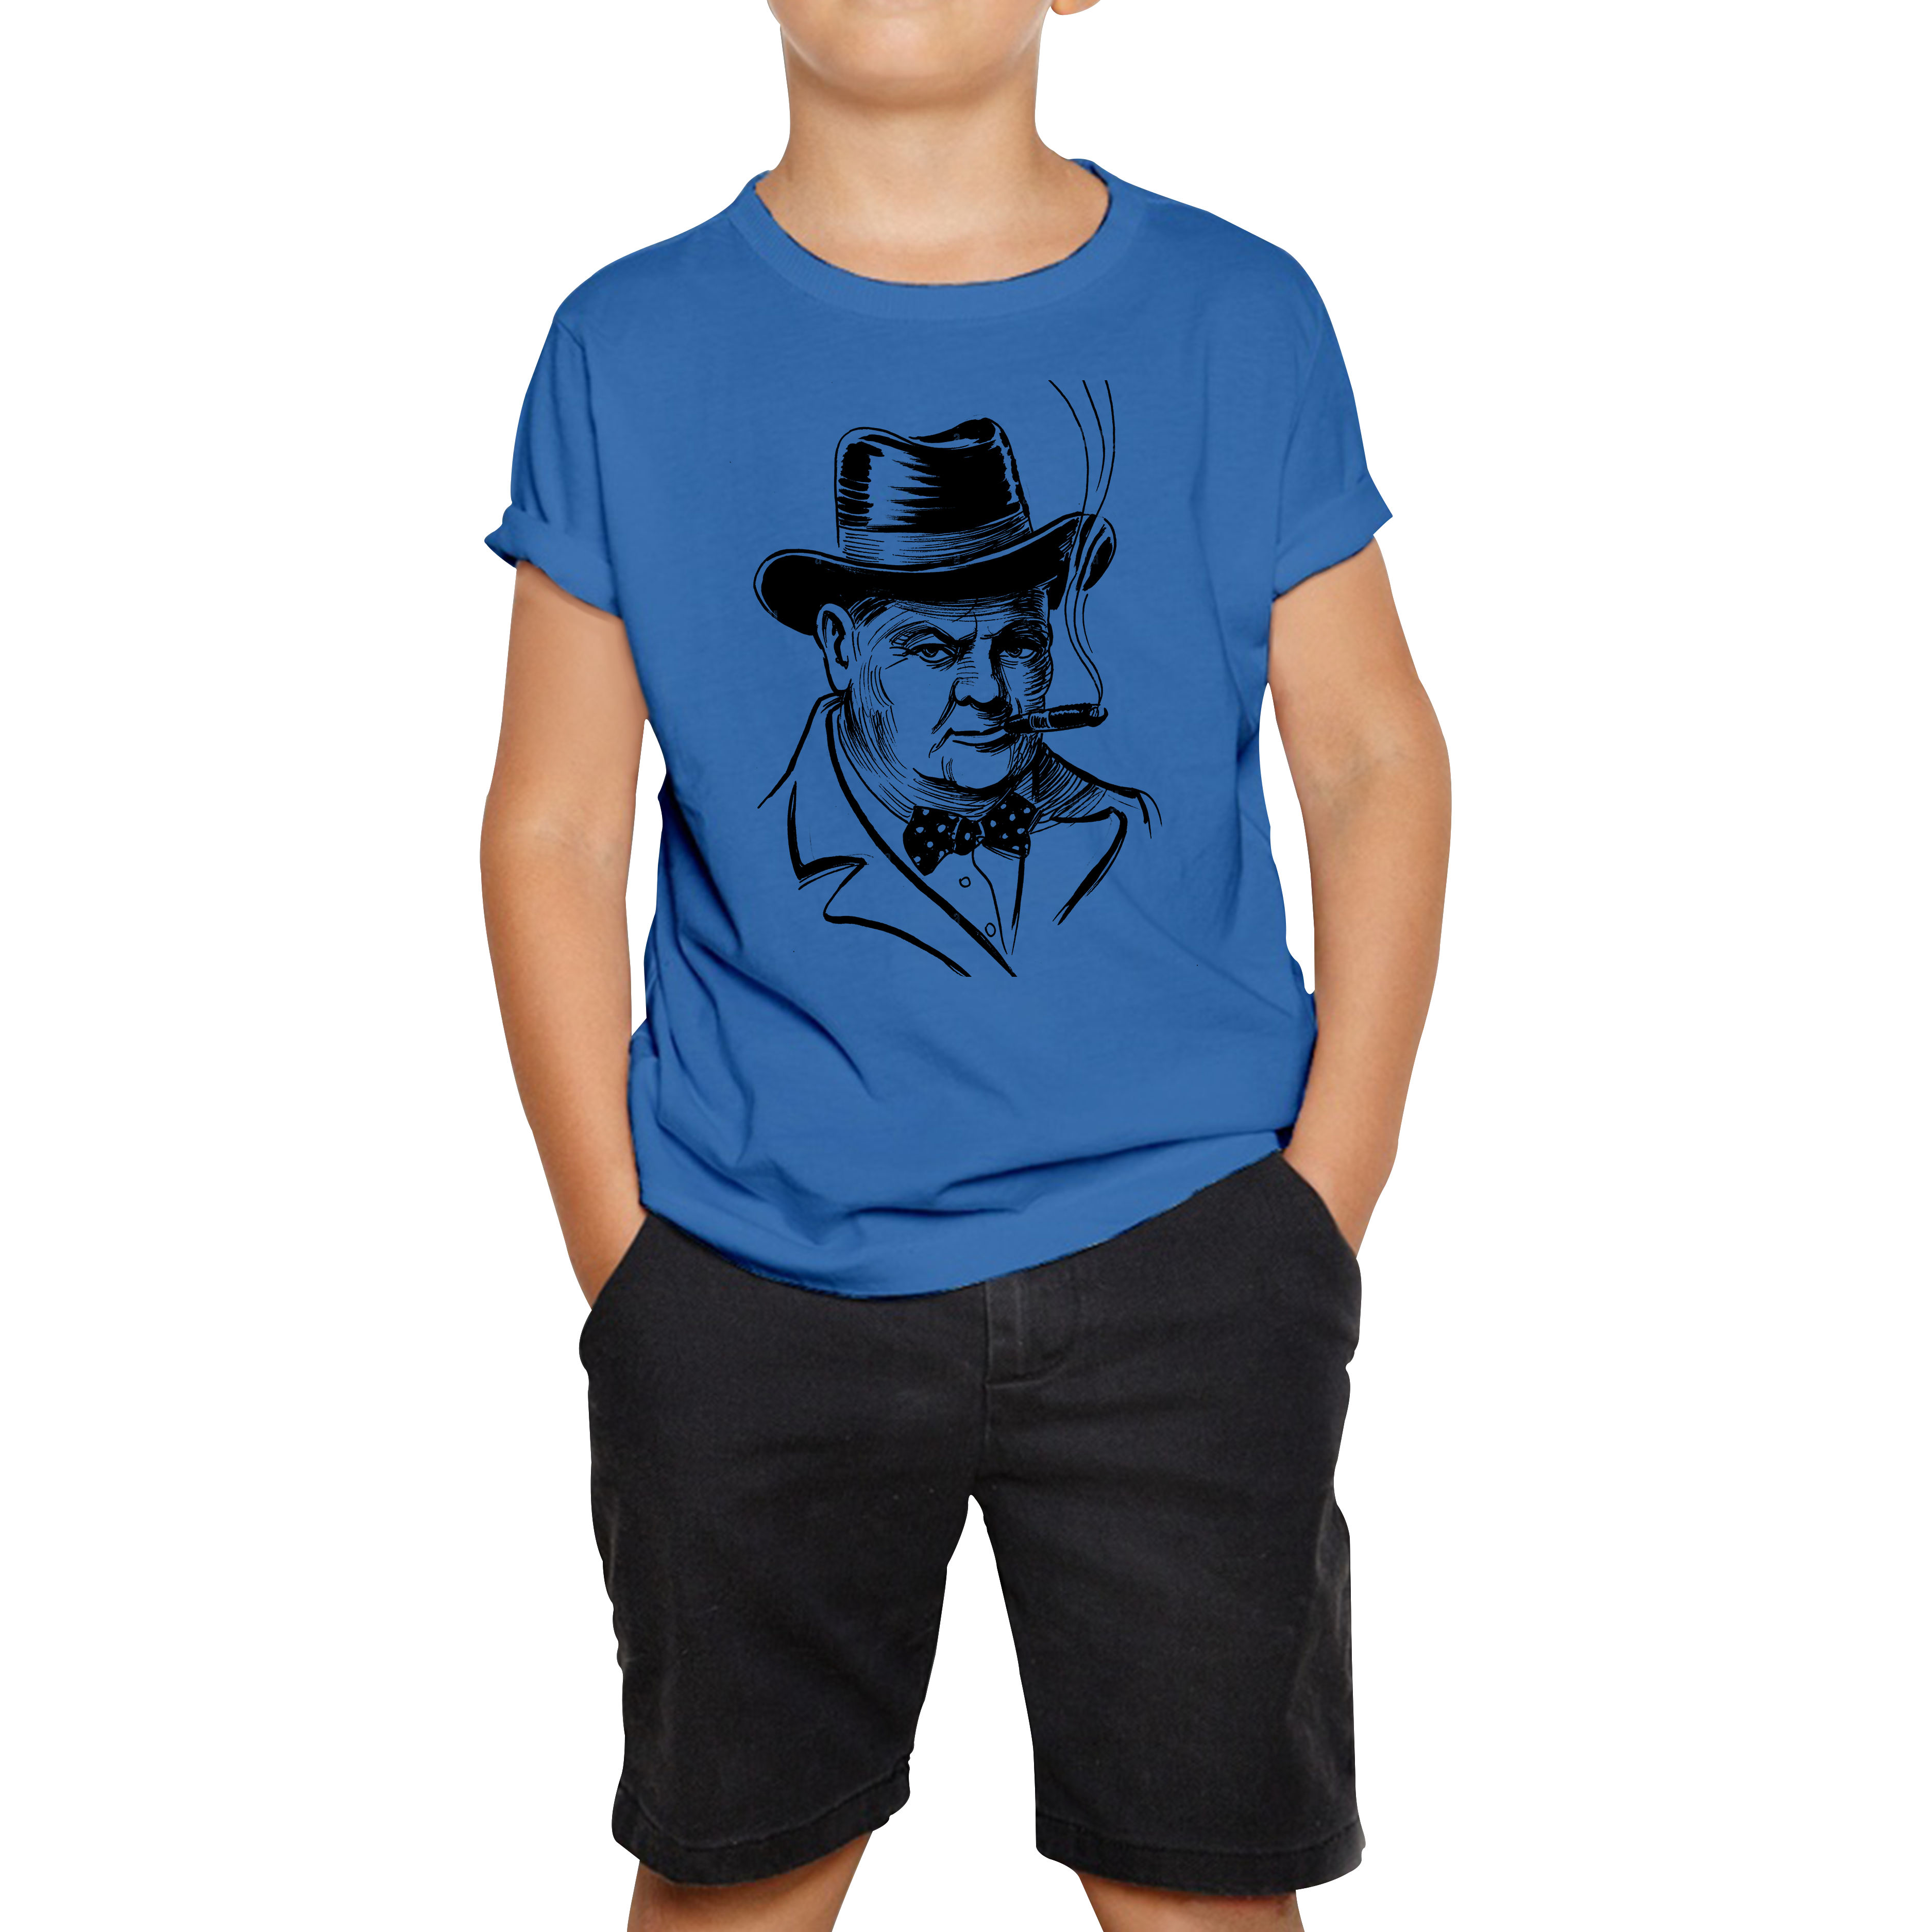 Sir Winston Churchill Former Prime Minister of the United Kingdom Kids T Shirt